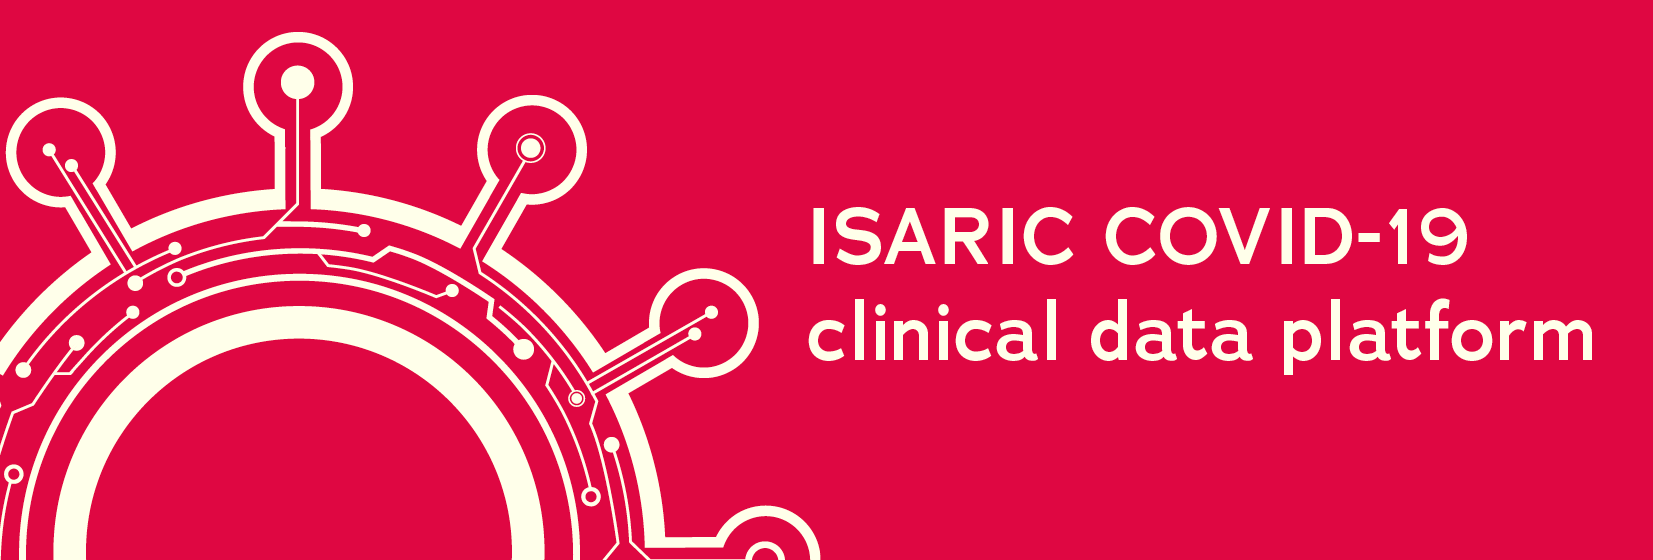 ISARIC Clinical data platform